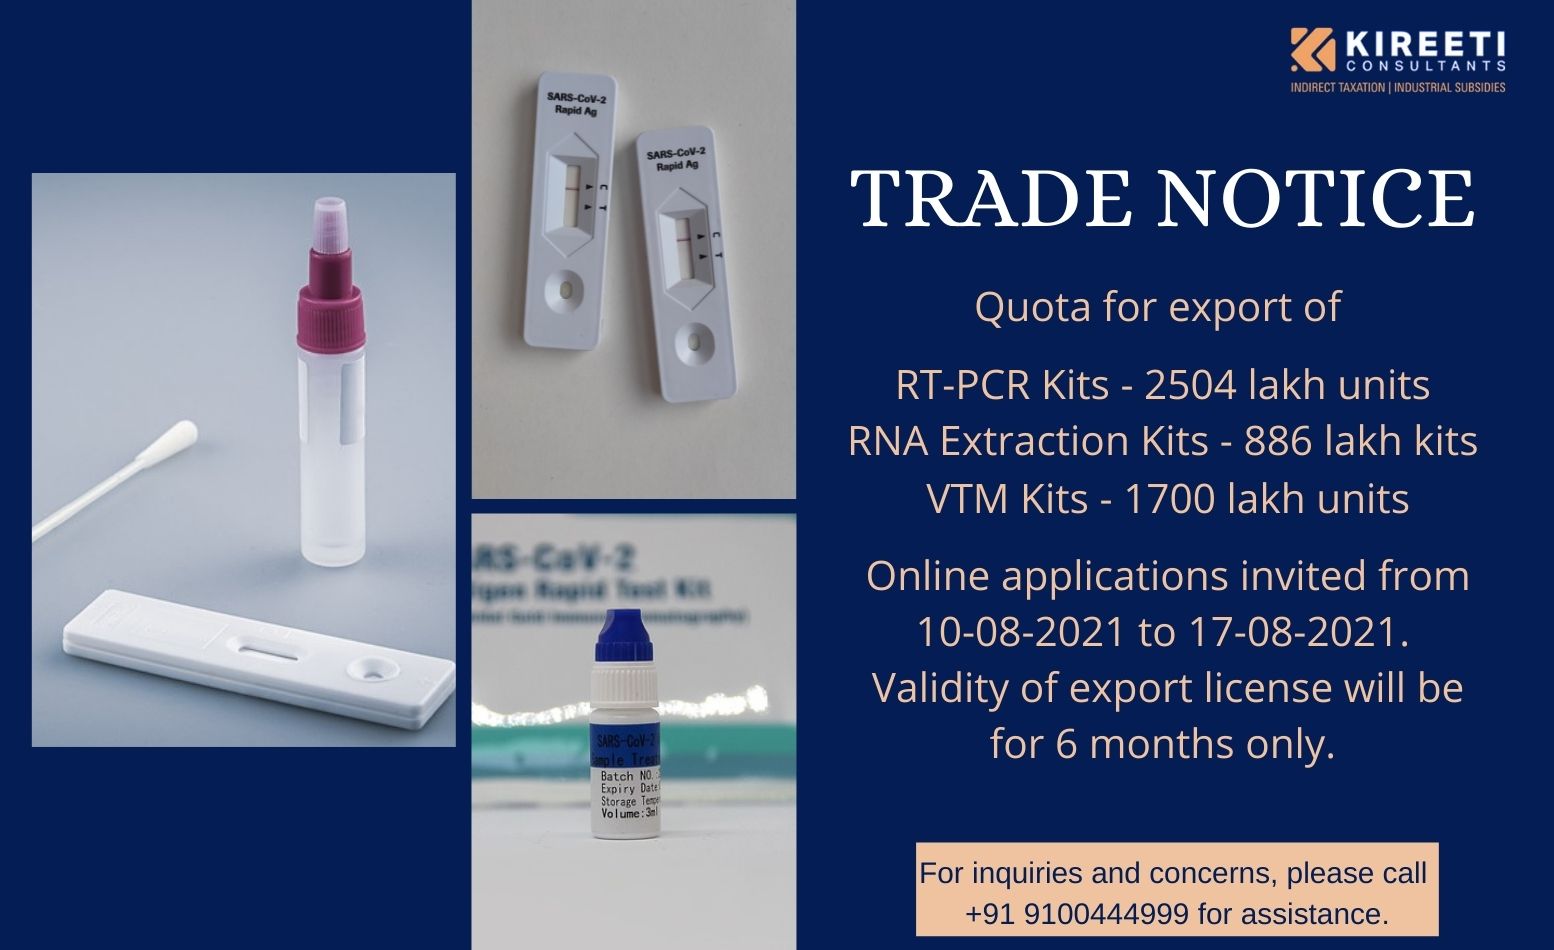 Applications for export of Diagnostic Kits